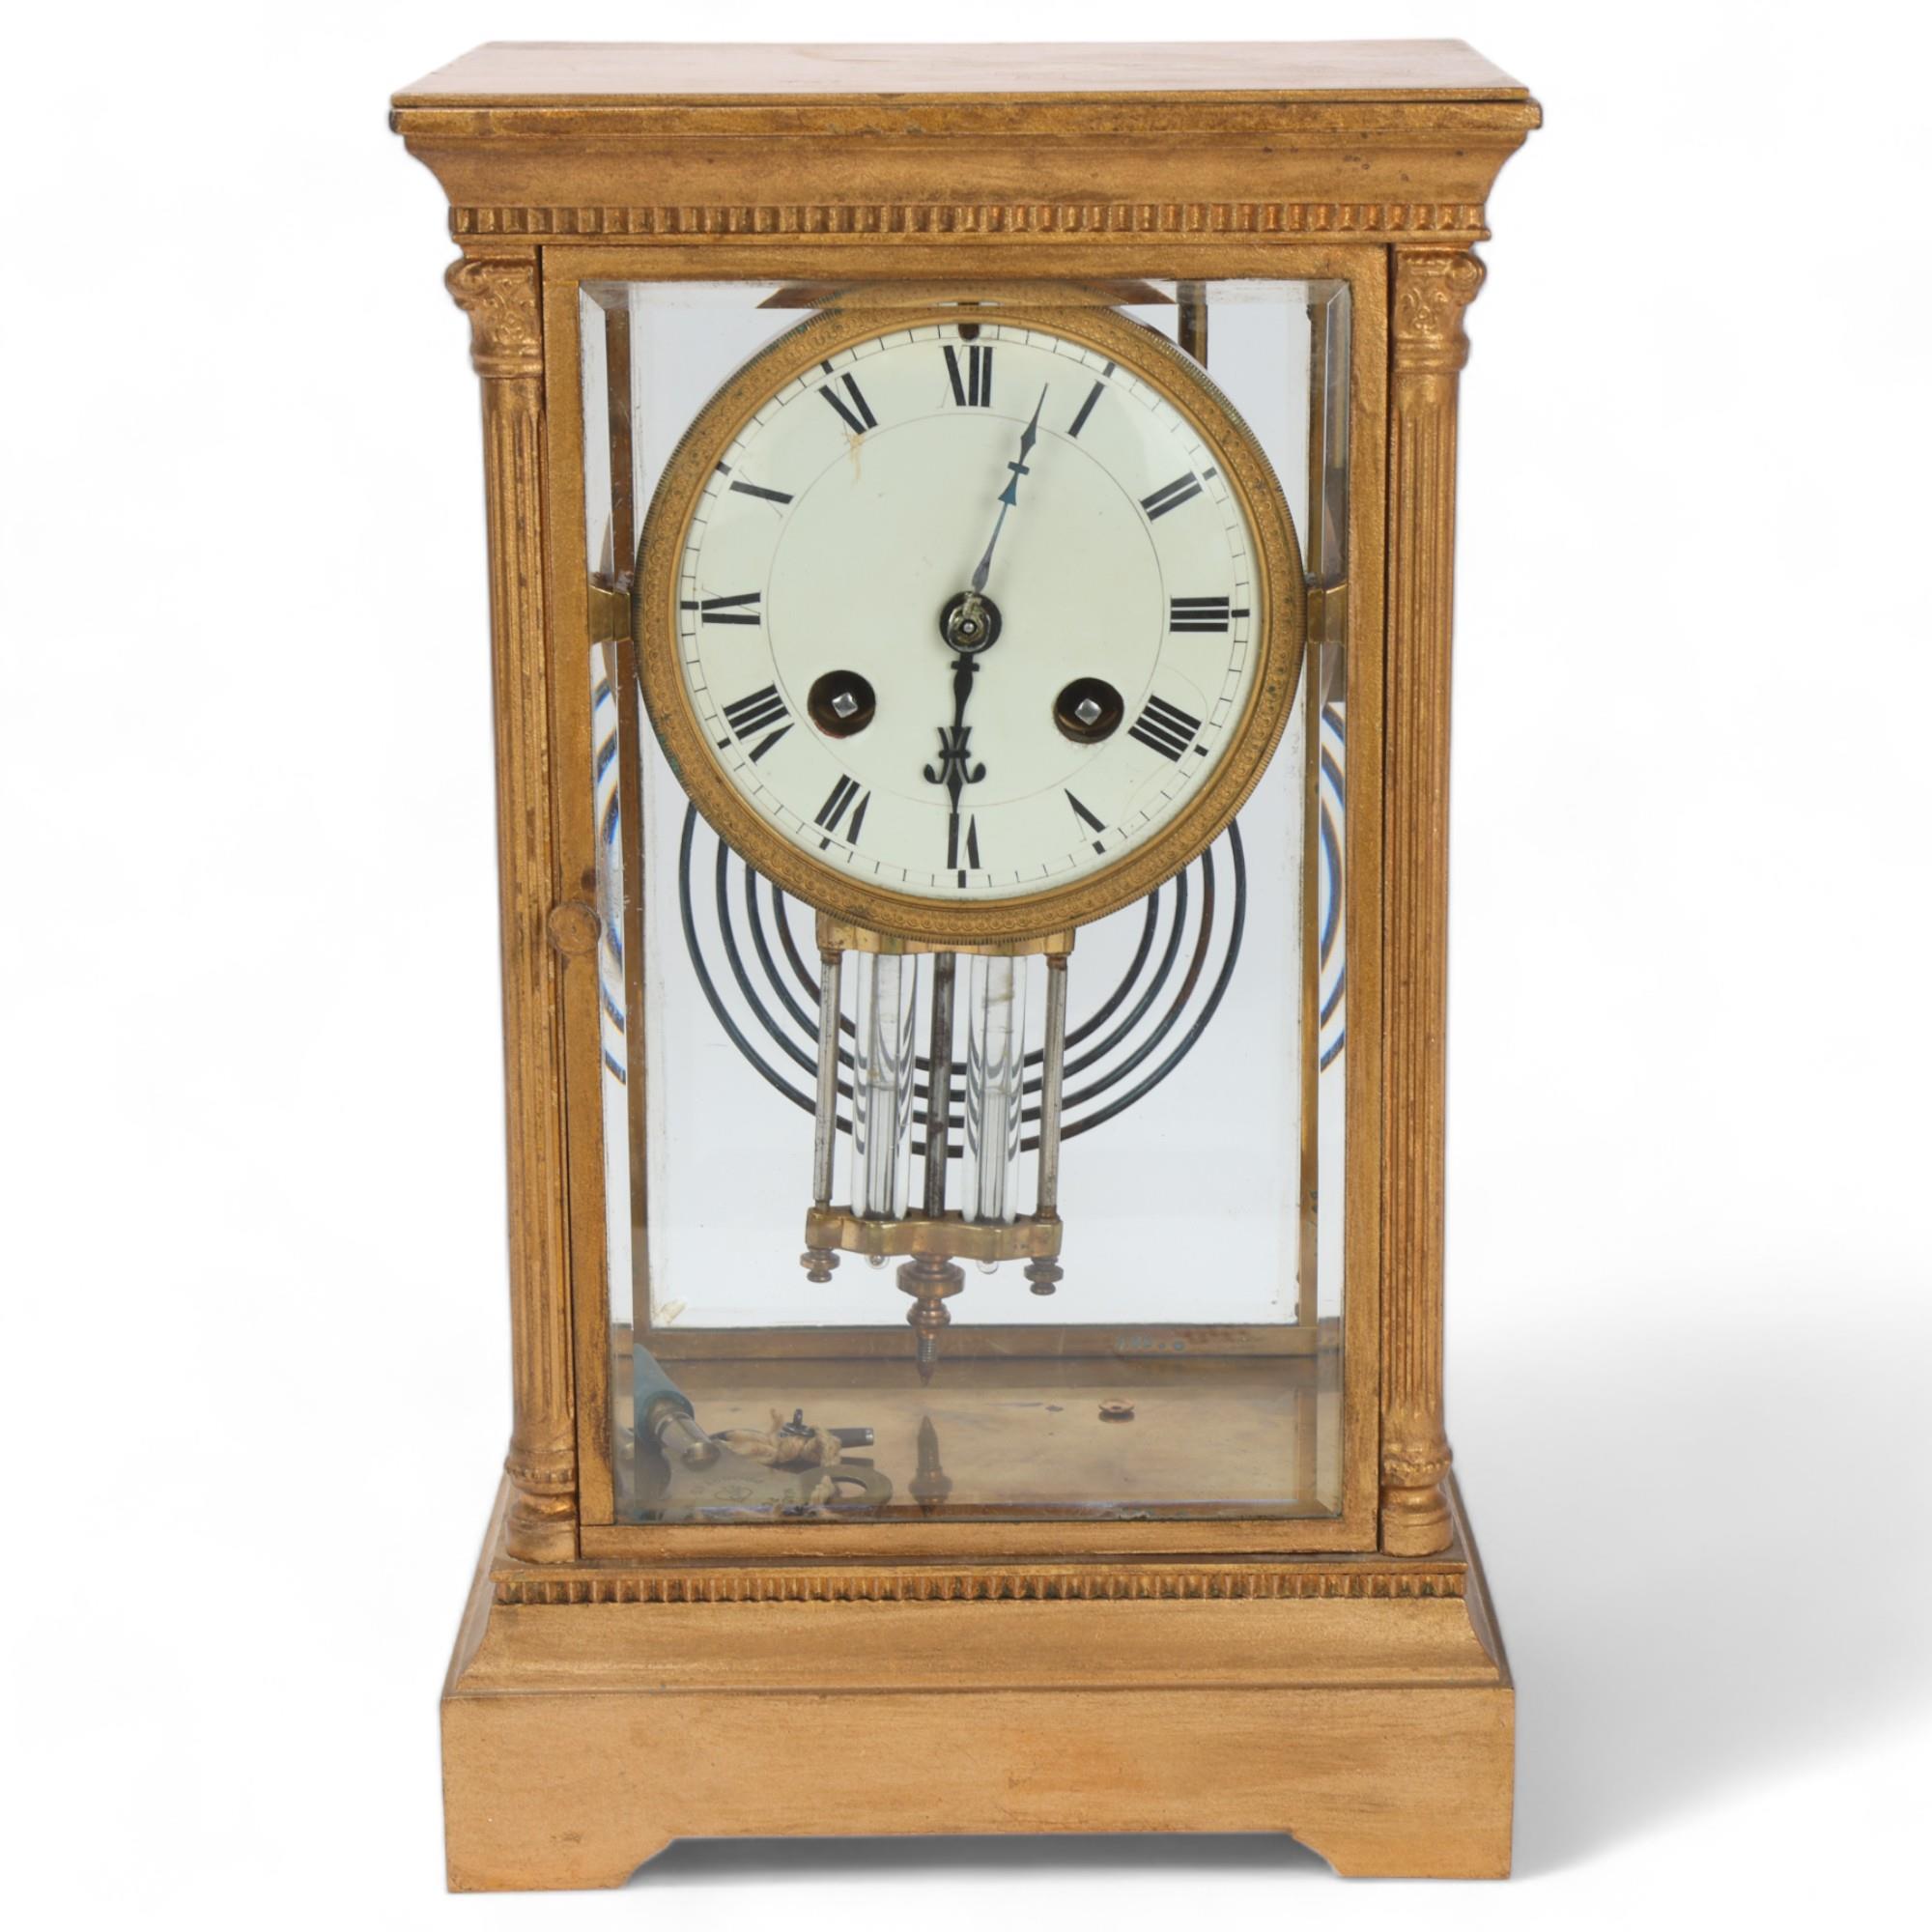 A 19th century French 4-glass regulator mantel clock, with enamel dial, mercury pendulum, and 8-